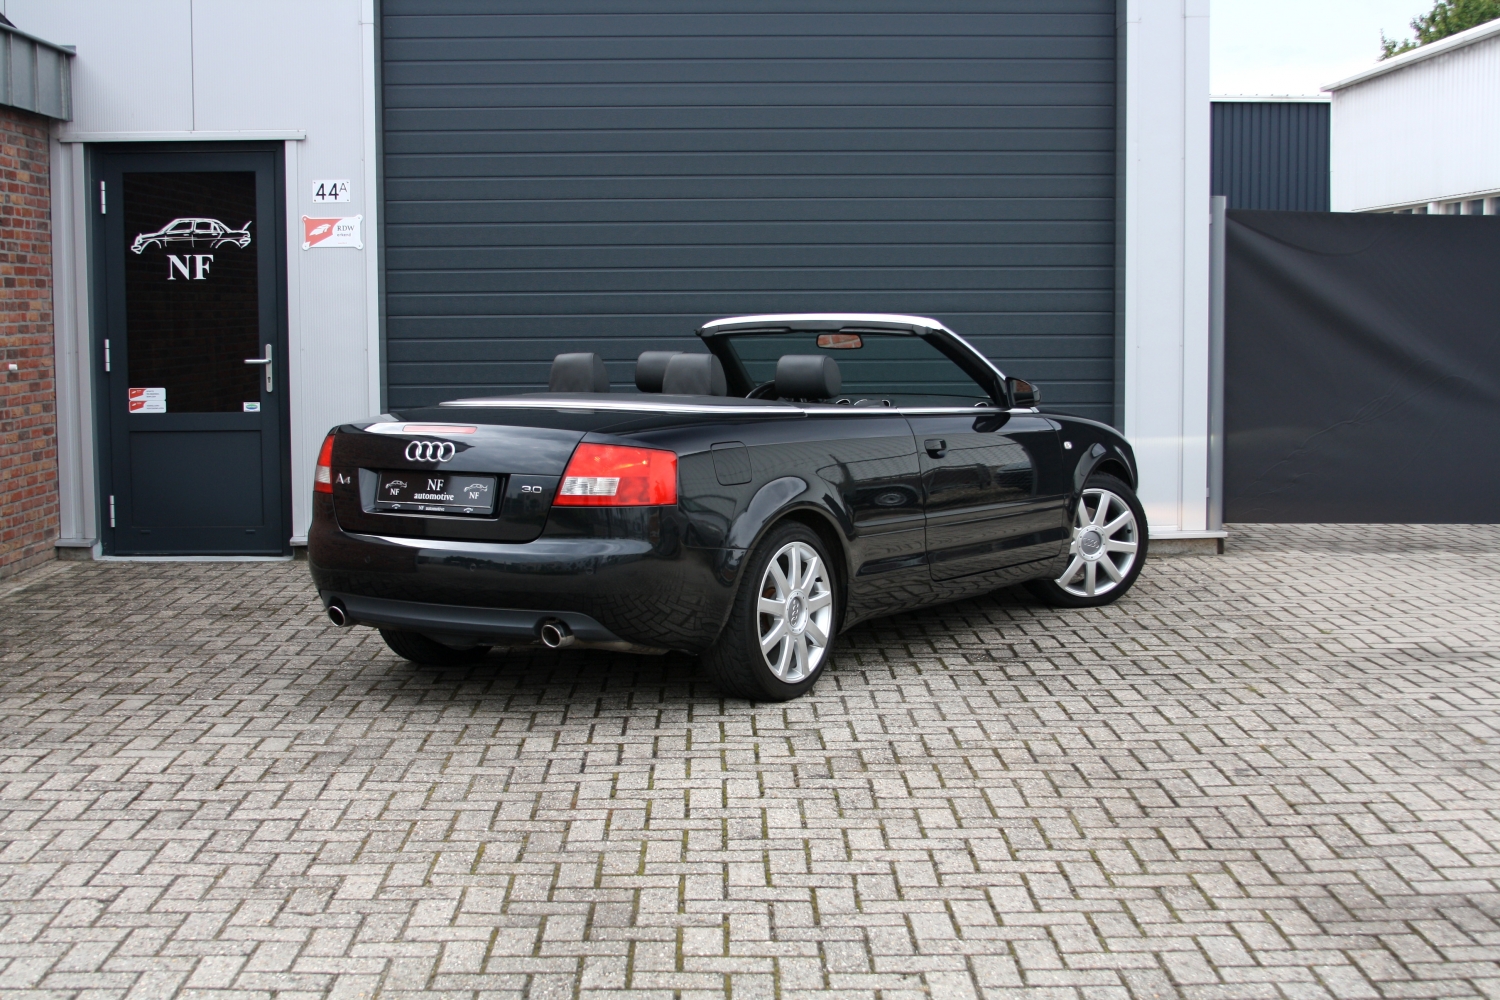 Audi-A4-Cabriolet-3.0-2003-017.JPG